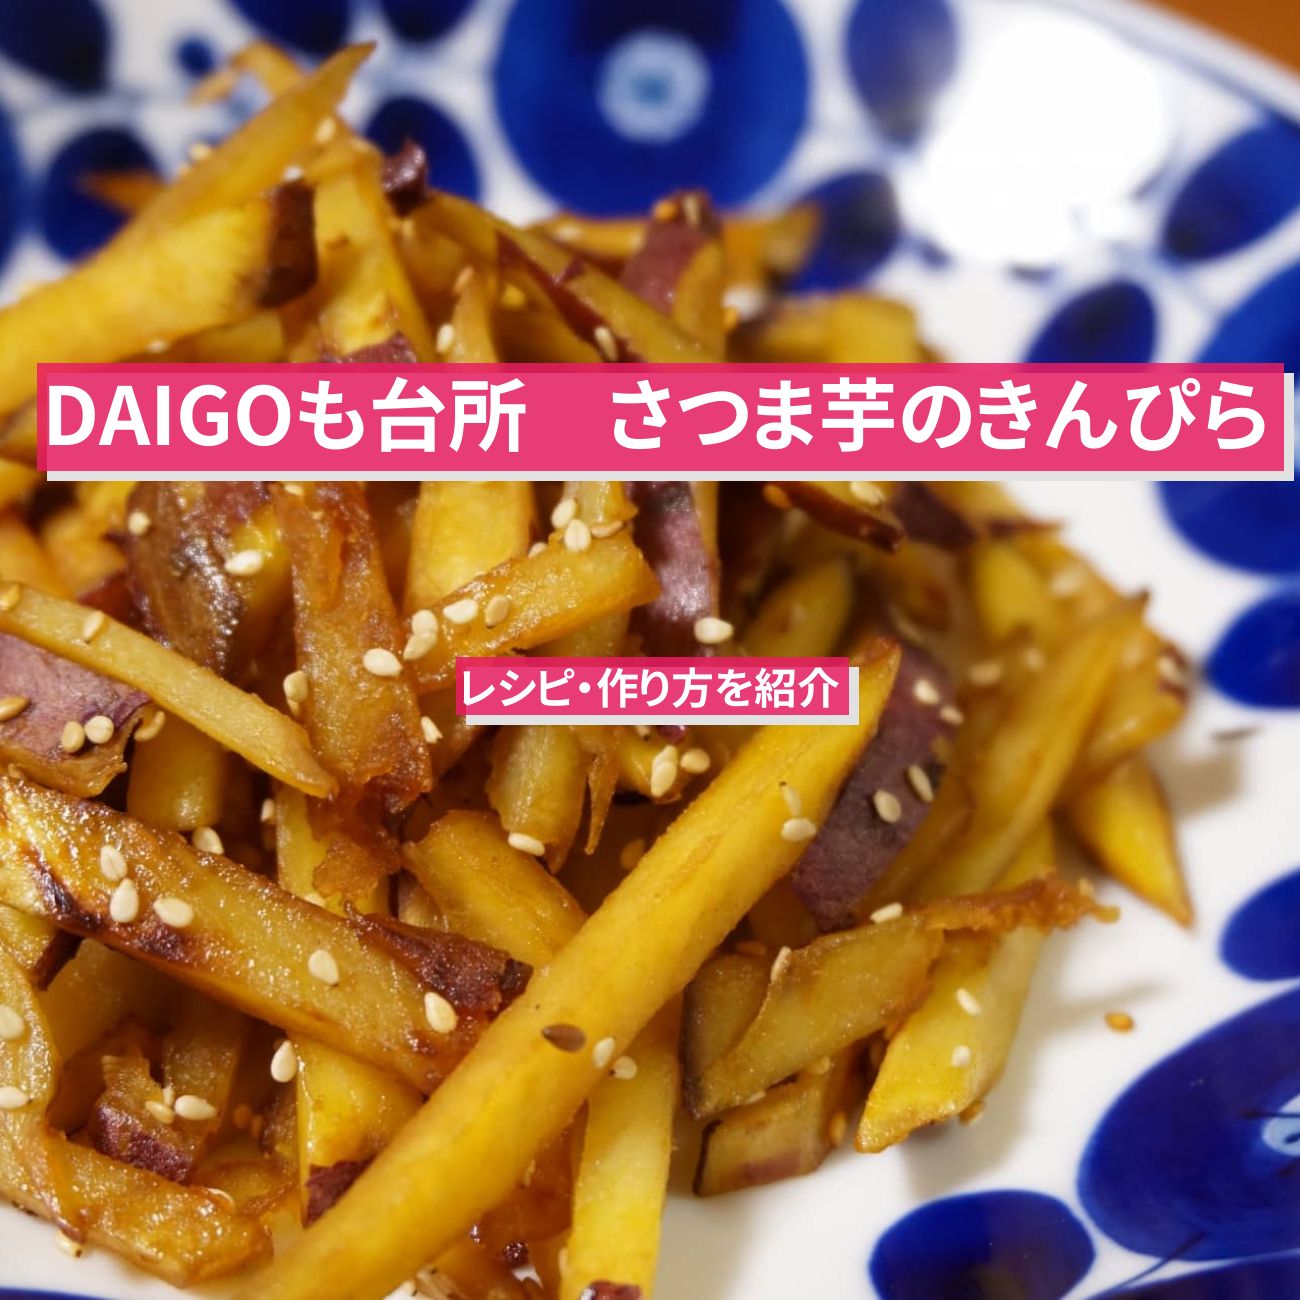 【DAIGOも台所】『さつま芋のきんぴら』のレシピ・作り方を紹介